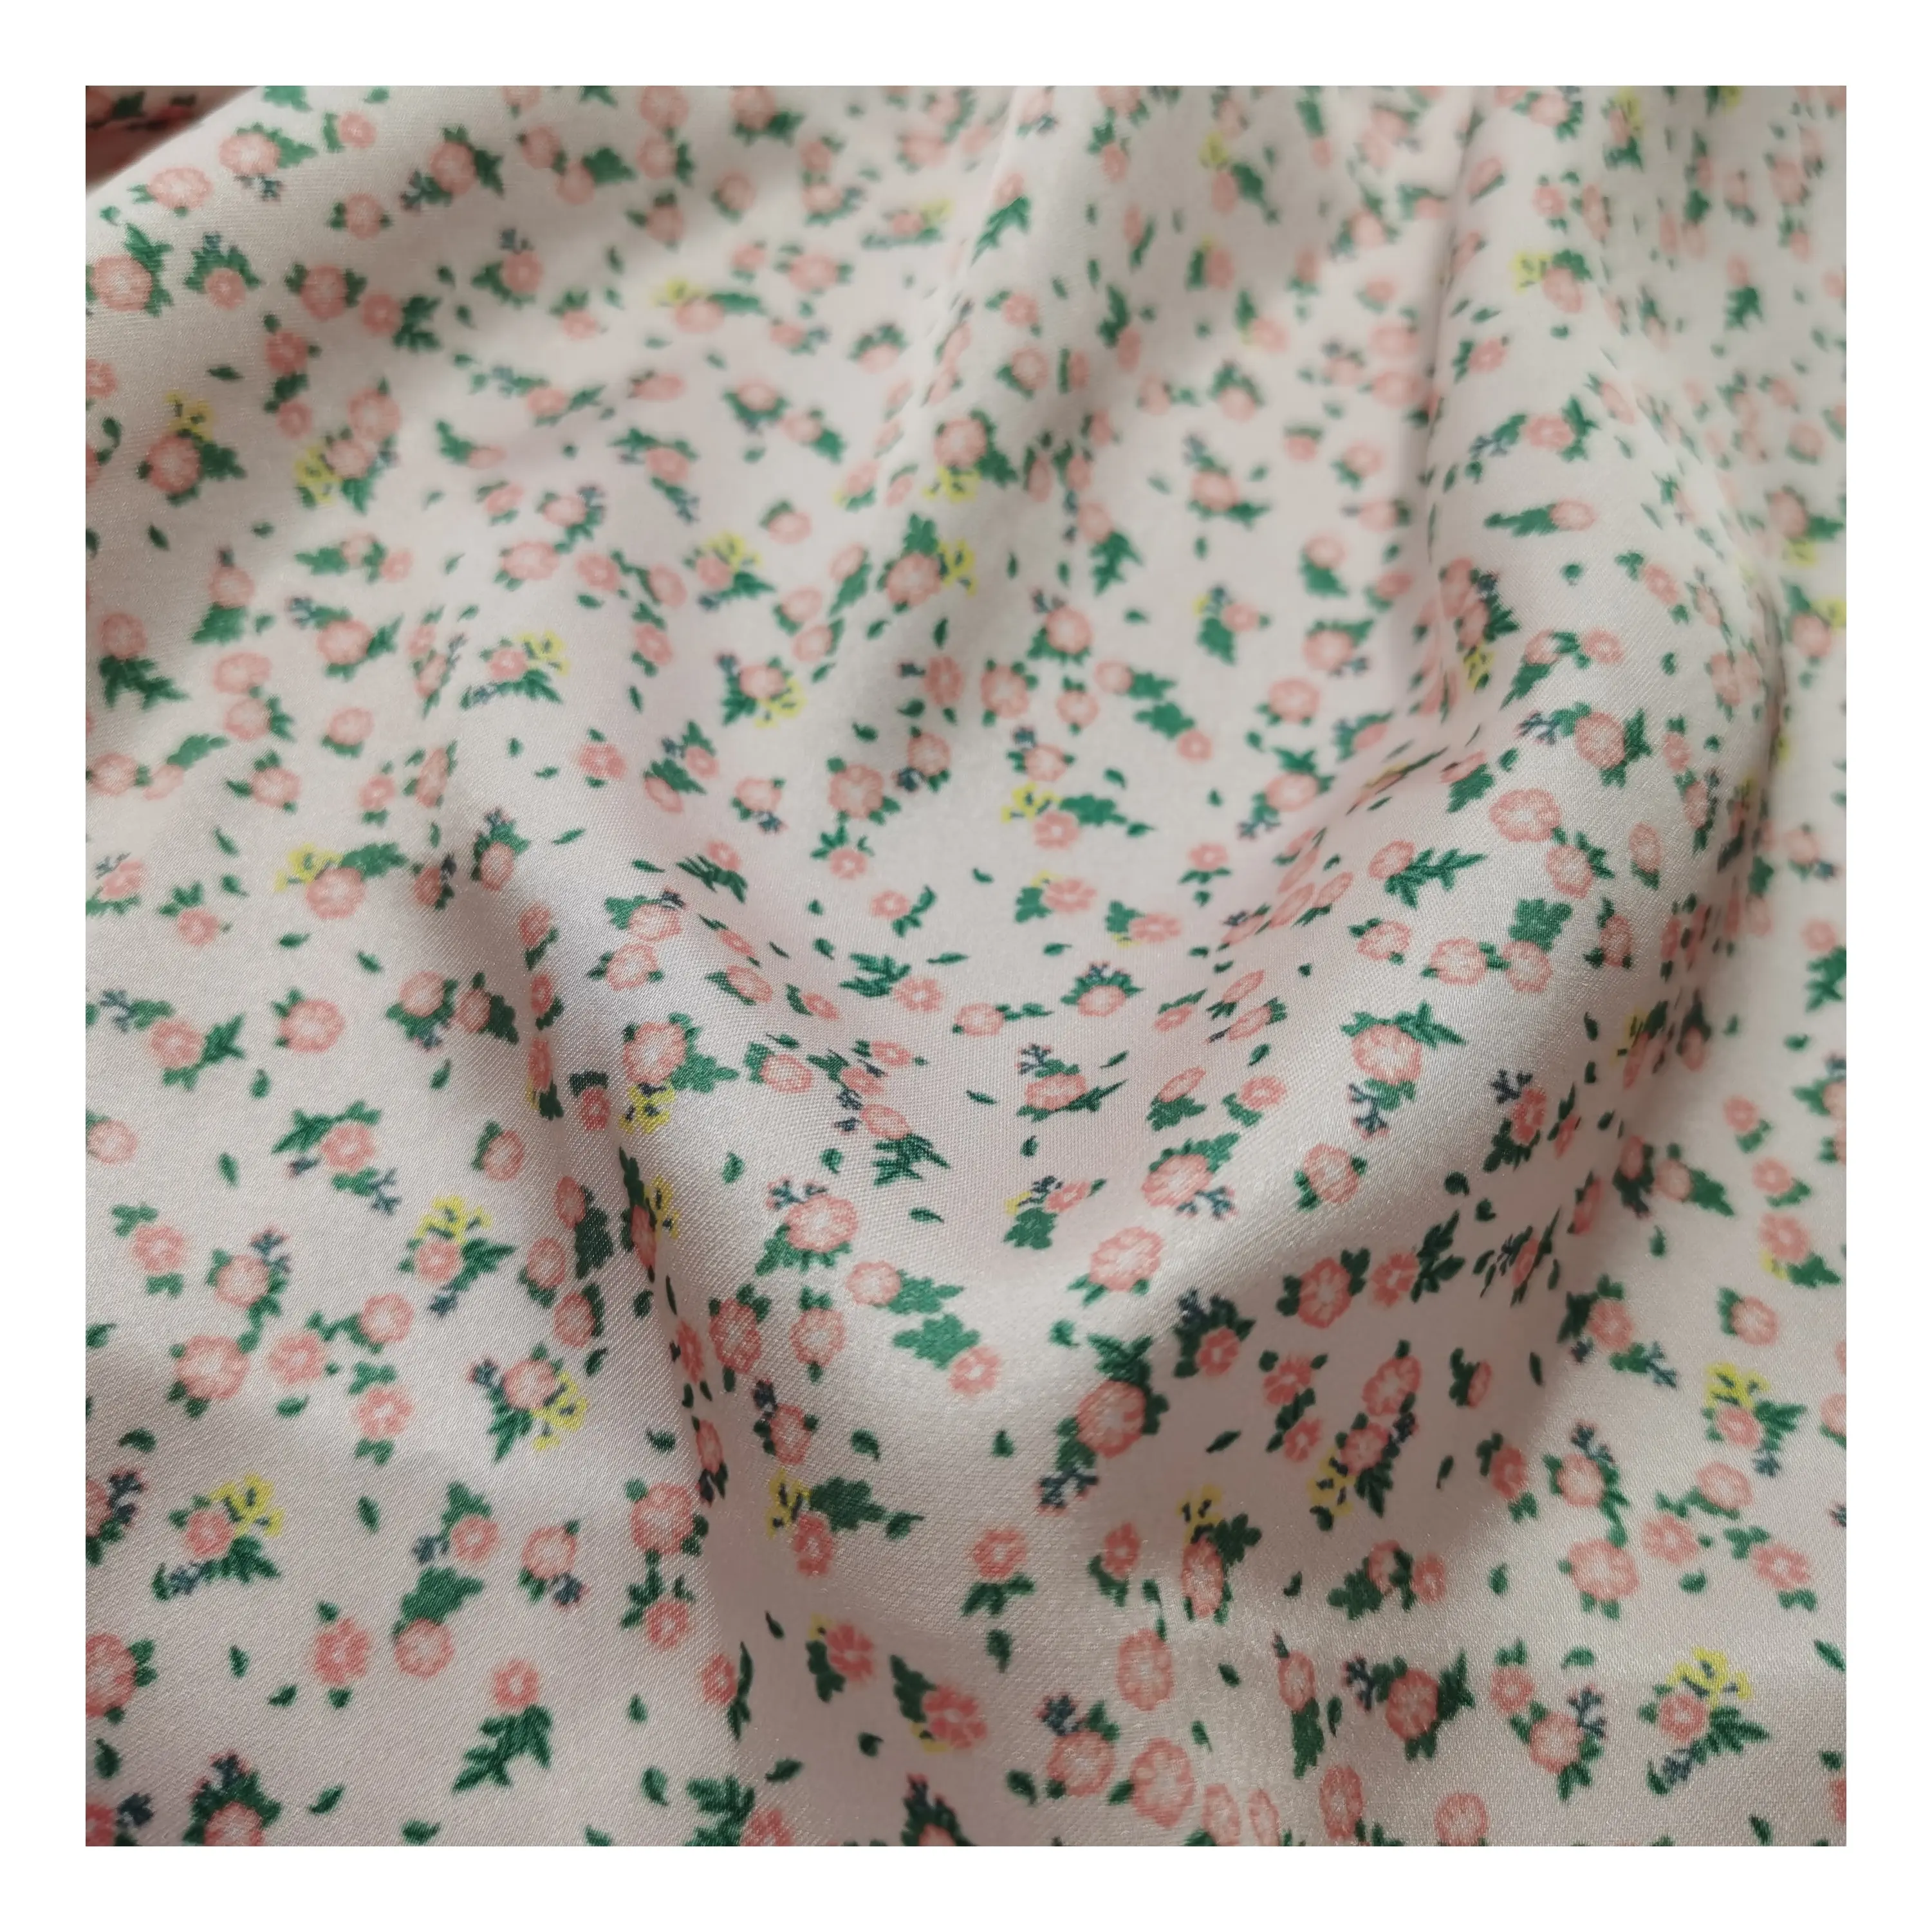 Satin Chiffon Digital Printed 100%Polyester Fabric Good Quality Beautiful Floral Flower Fabrics For Dress Clothing